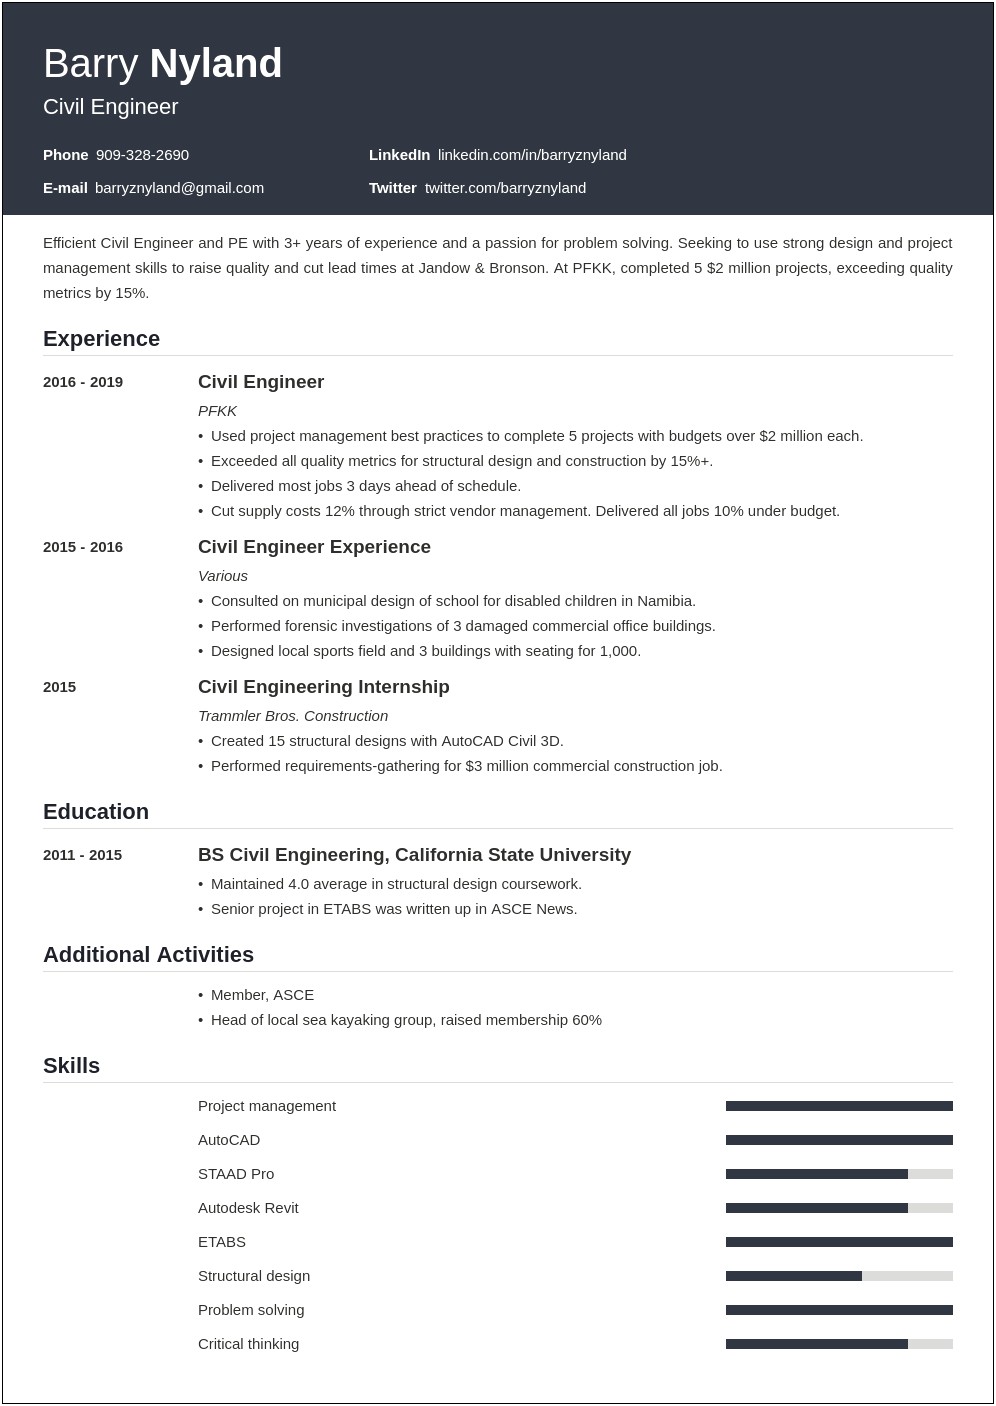 Civil Engineer Job Description Resume